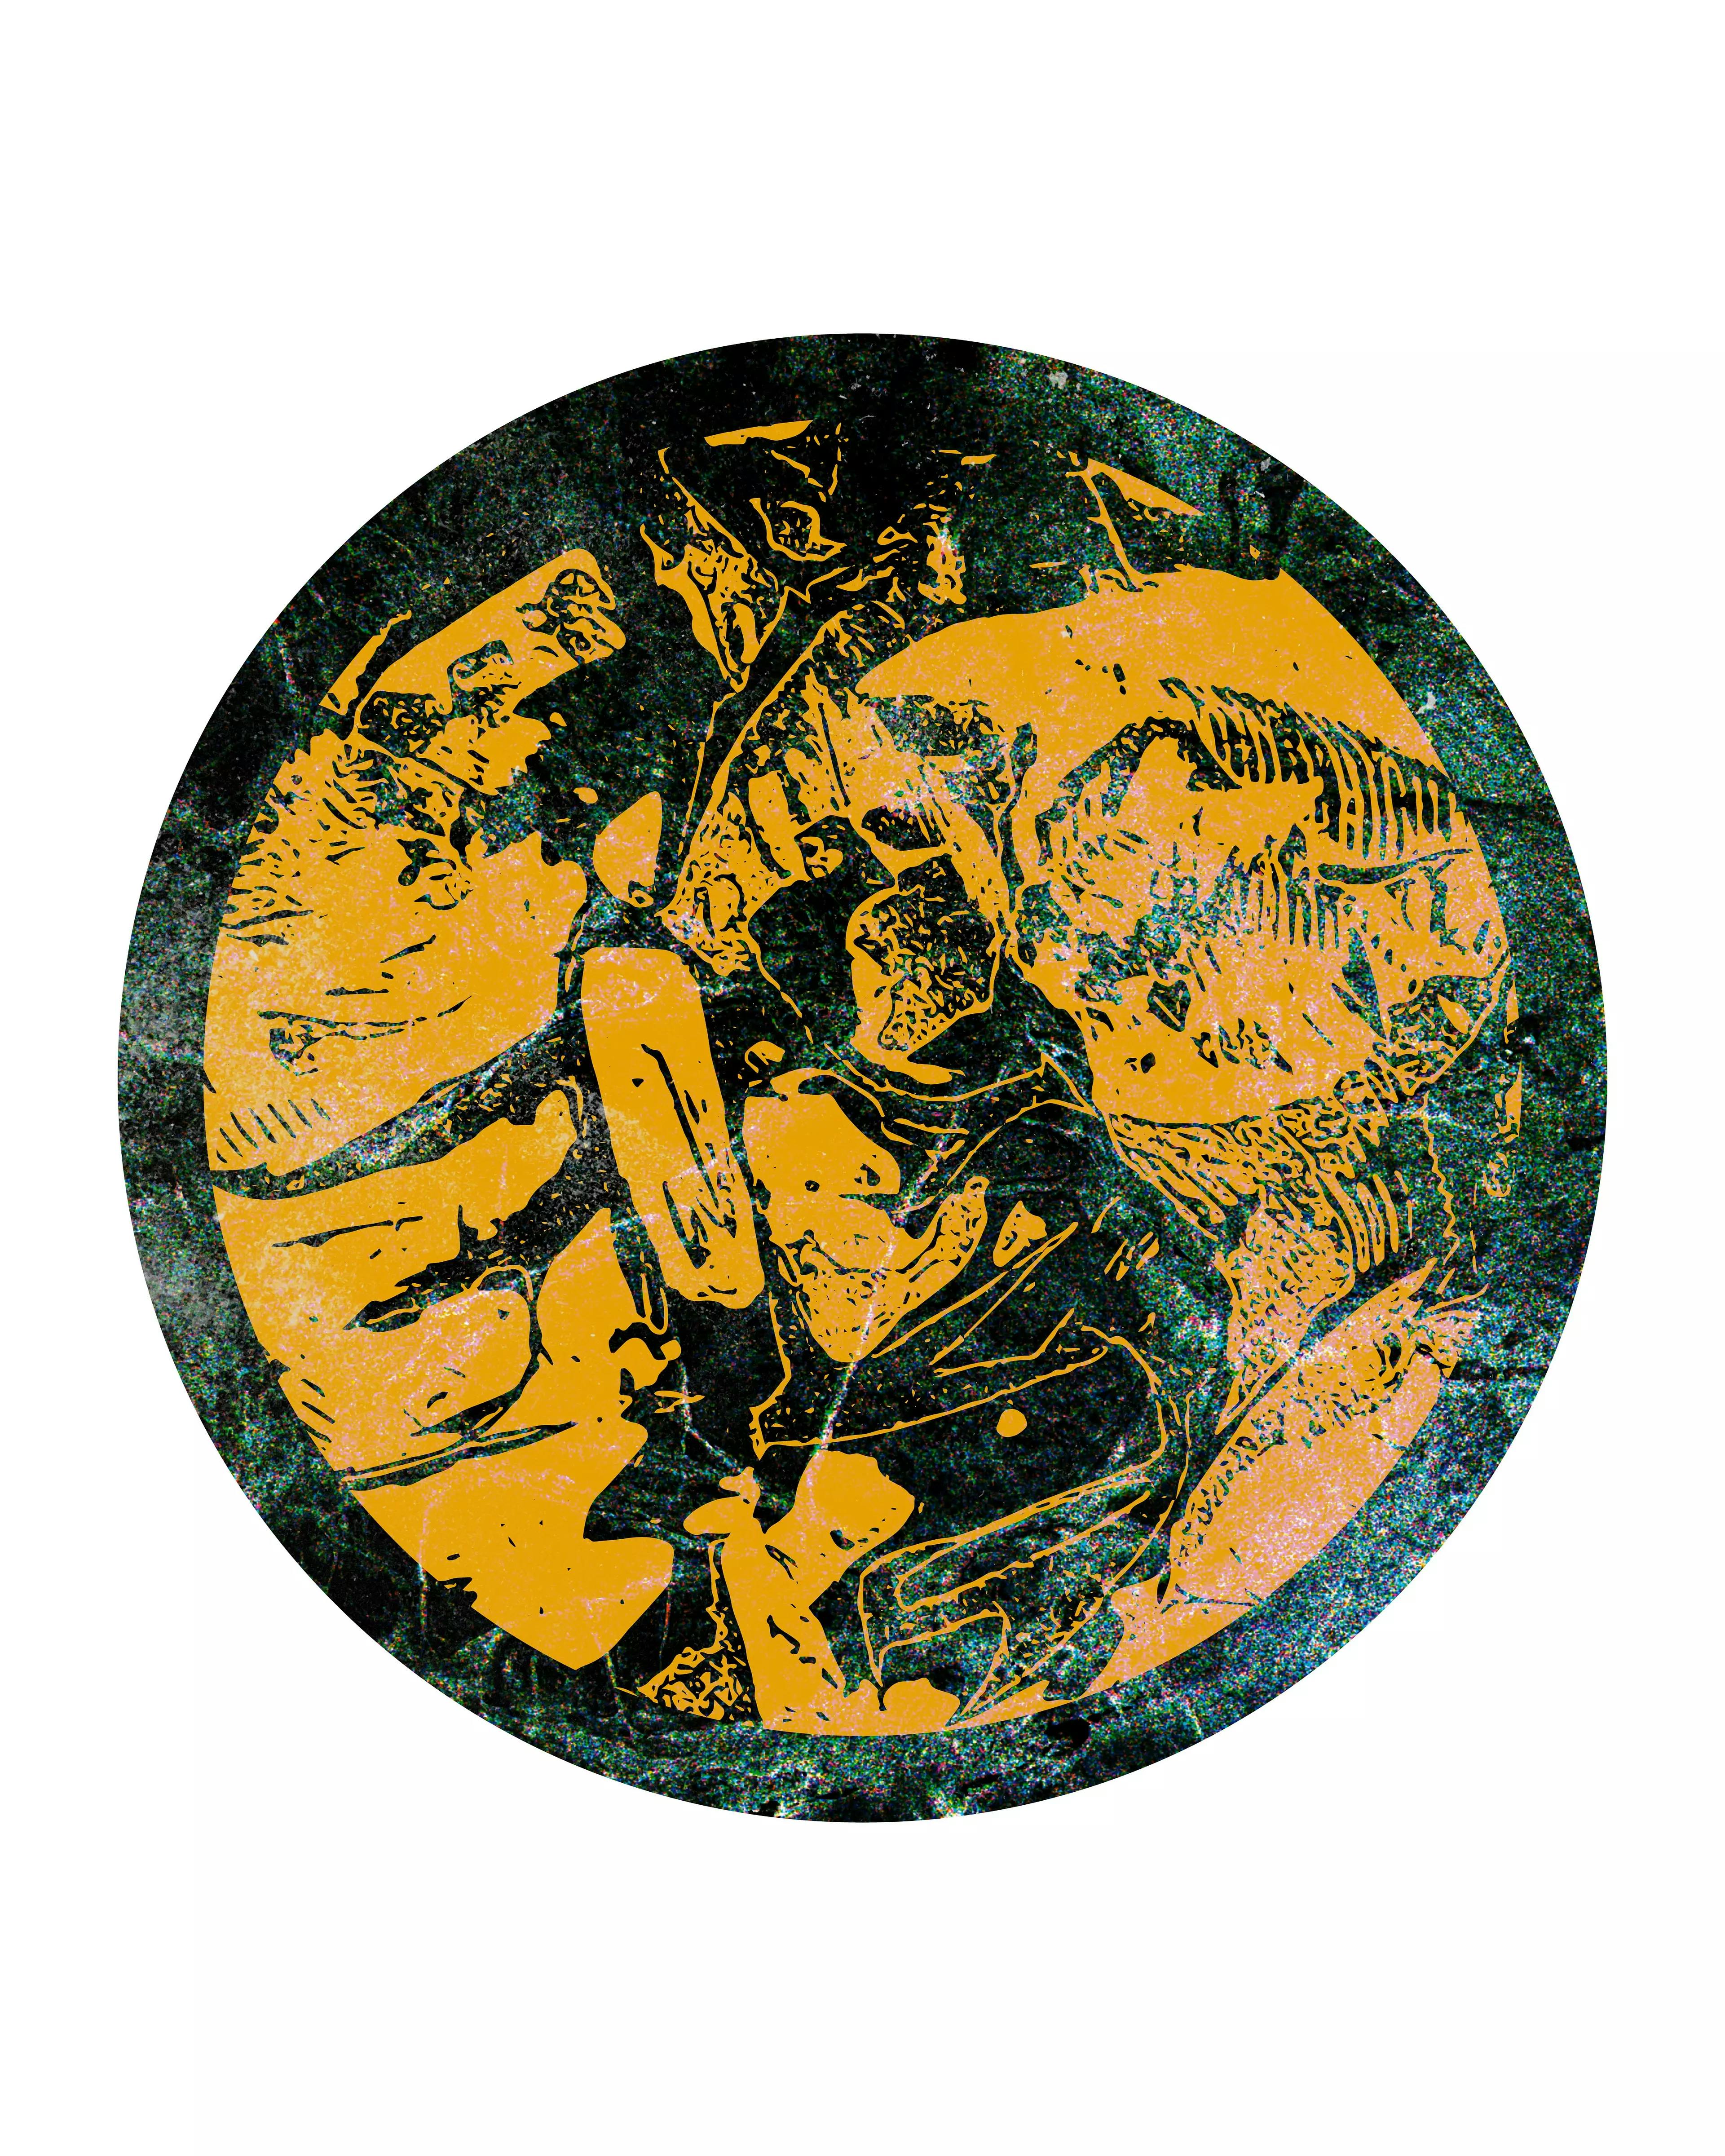 A circular green and gold abstract painting